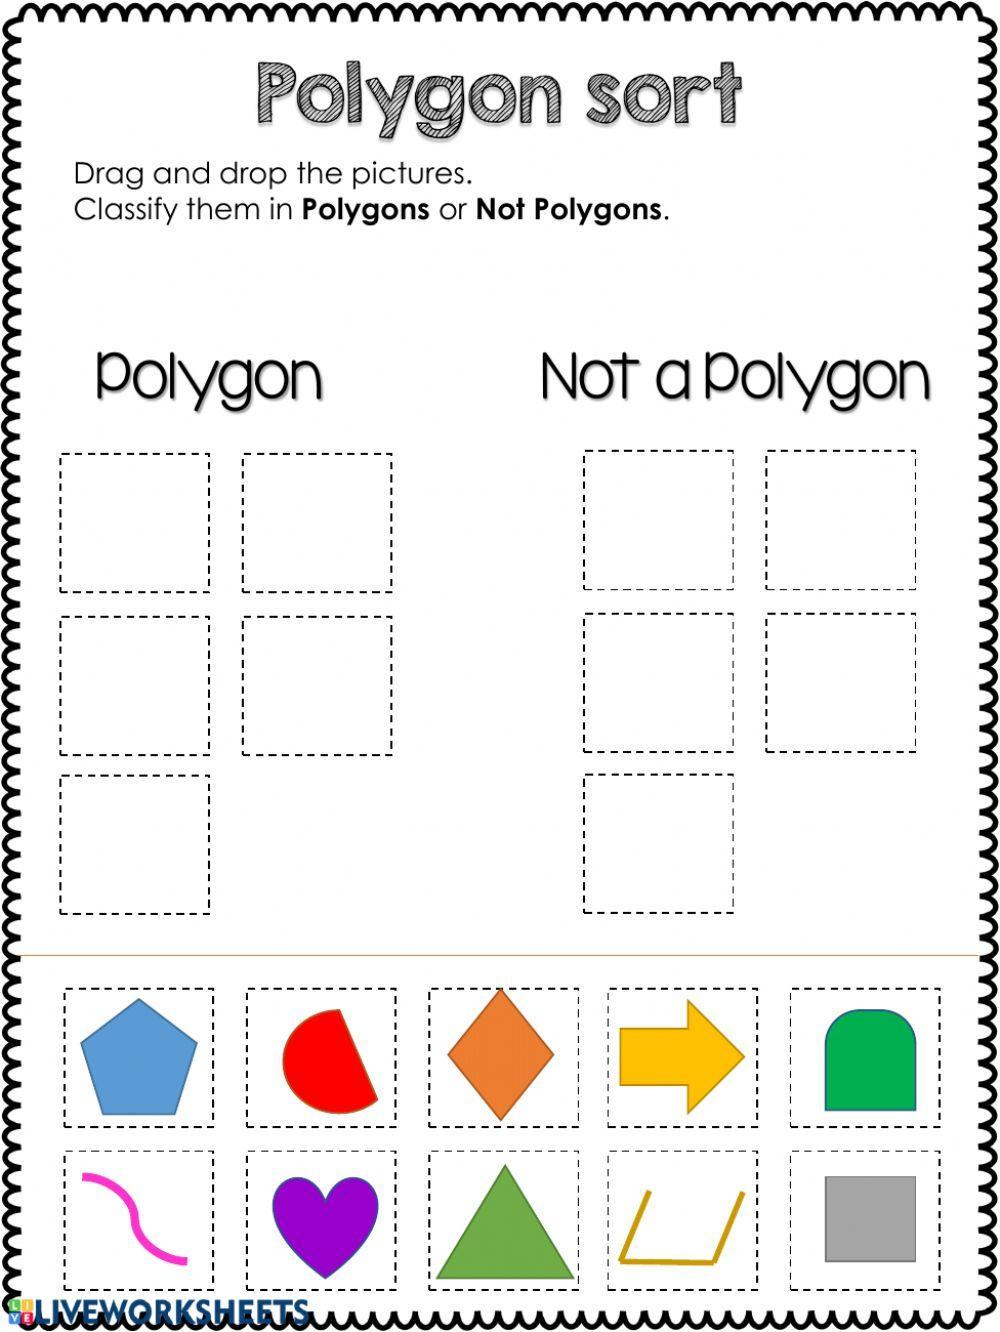 Polygon-Not a polygon